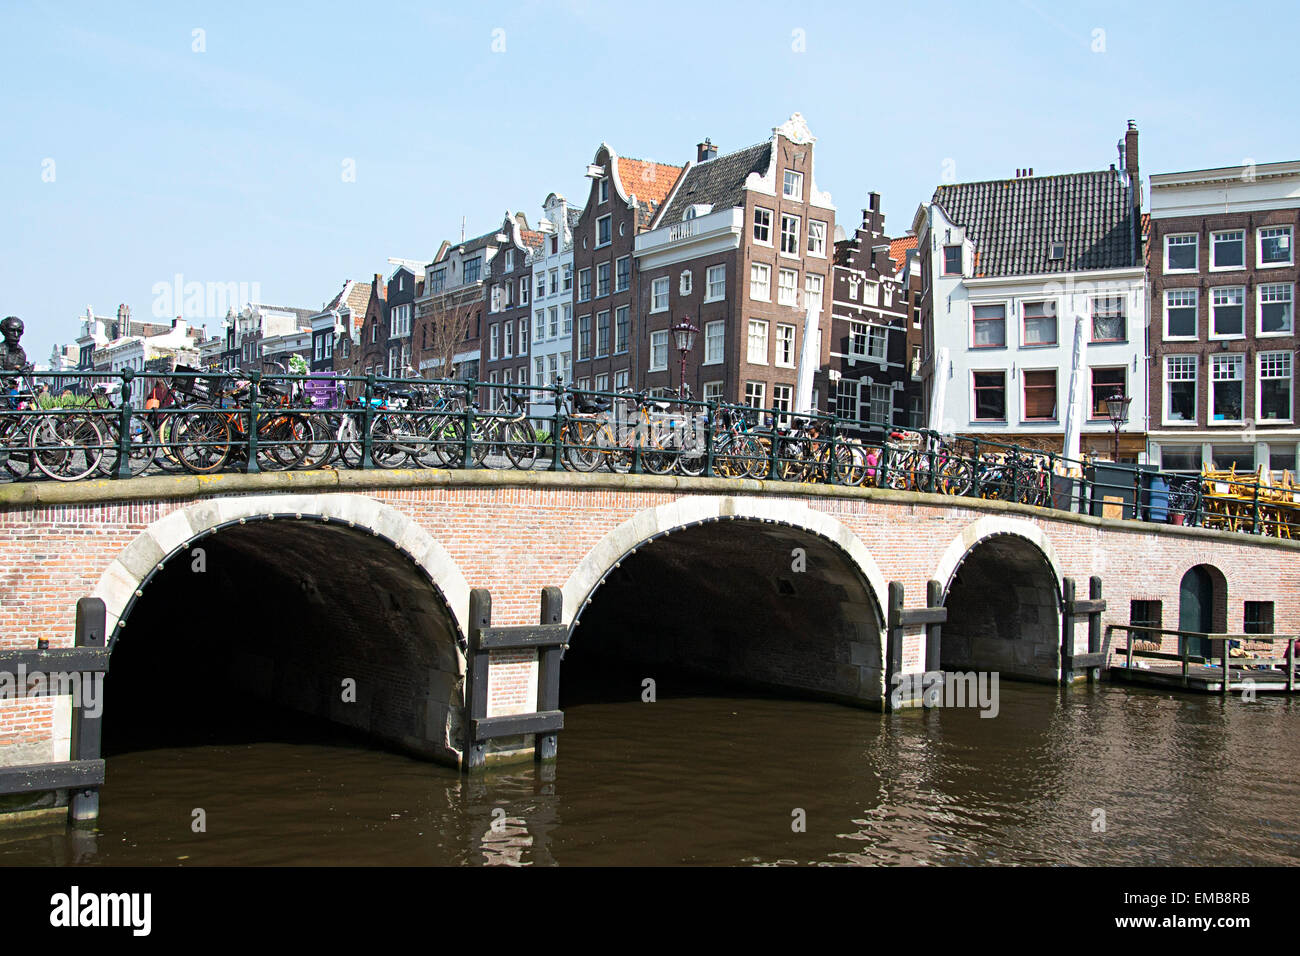 Torensluis bridge, oldest bridge in the city, over the Singel canal in Amsterdam. Stock Photo